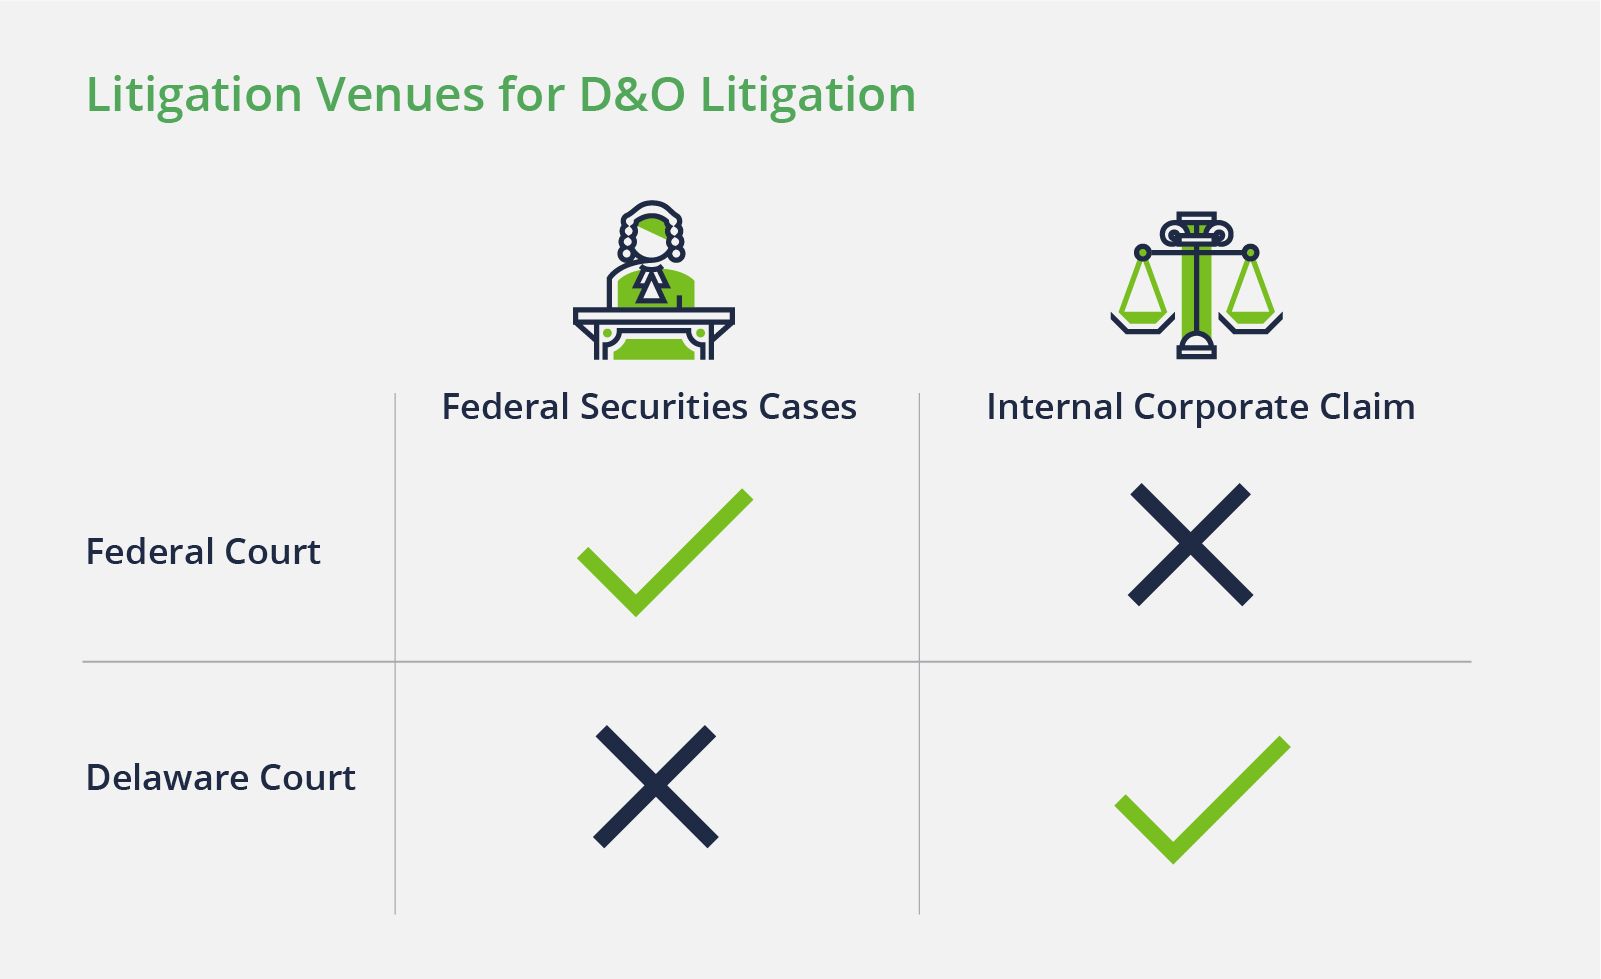 Litigation Venues for D&O Litigation comparison of Federal vs. Delaware Court